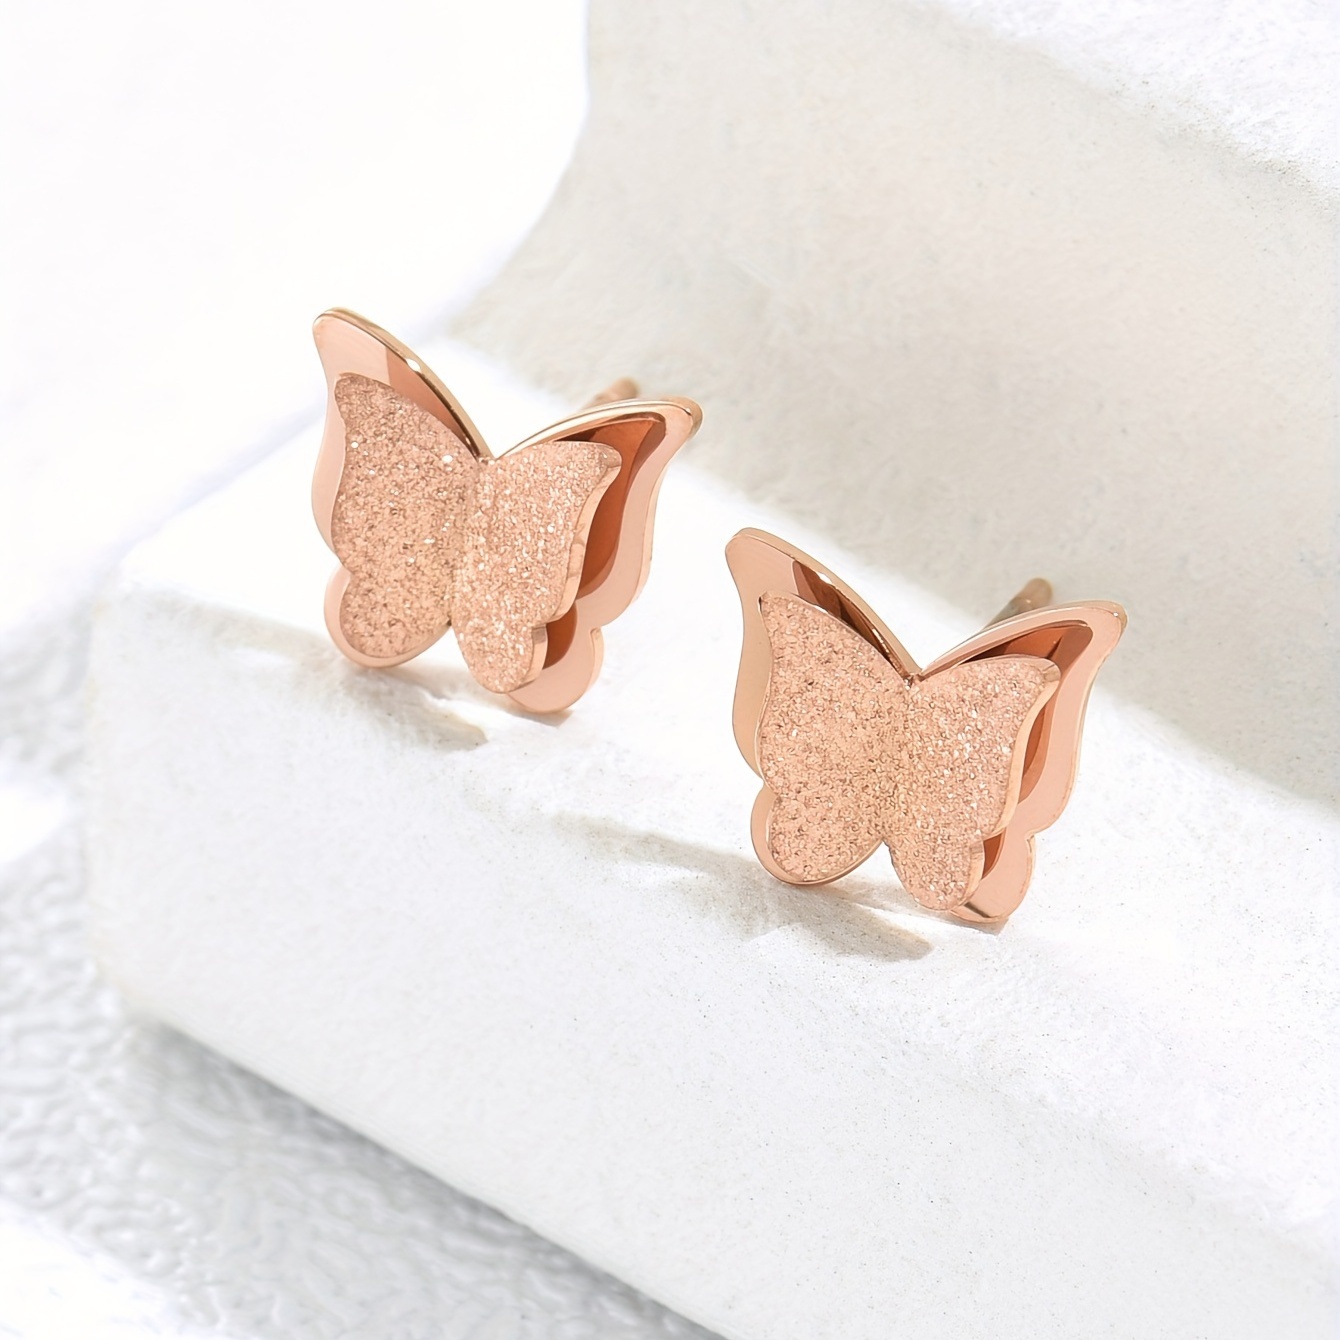 100pcs Stainless Steel Earrings Back Golden Silvery Tone Rose Golden  Butterfly Ear Nuts Earring Pin Stopper DIY Jewelry Making Supplies 6x4.5mm